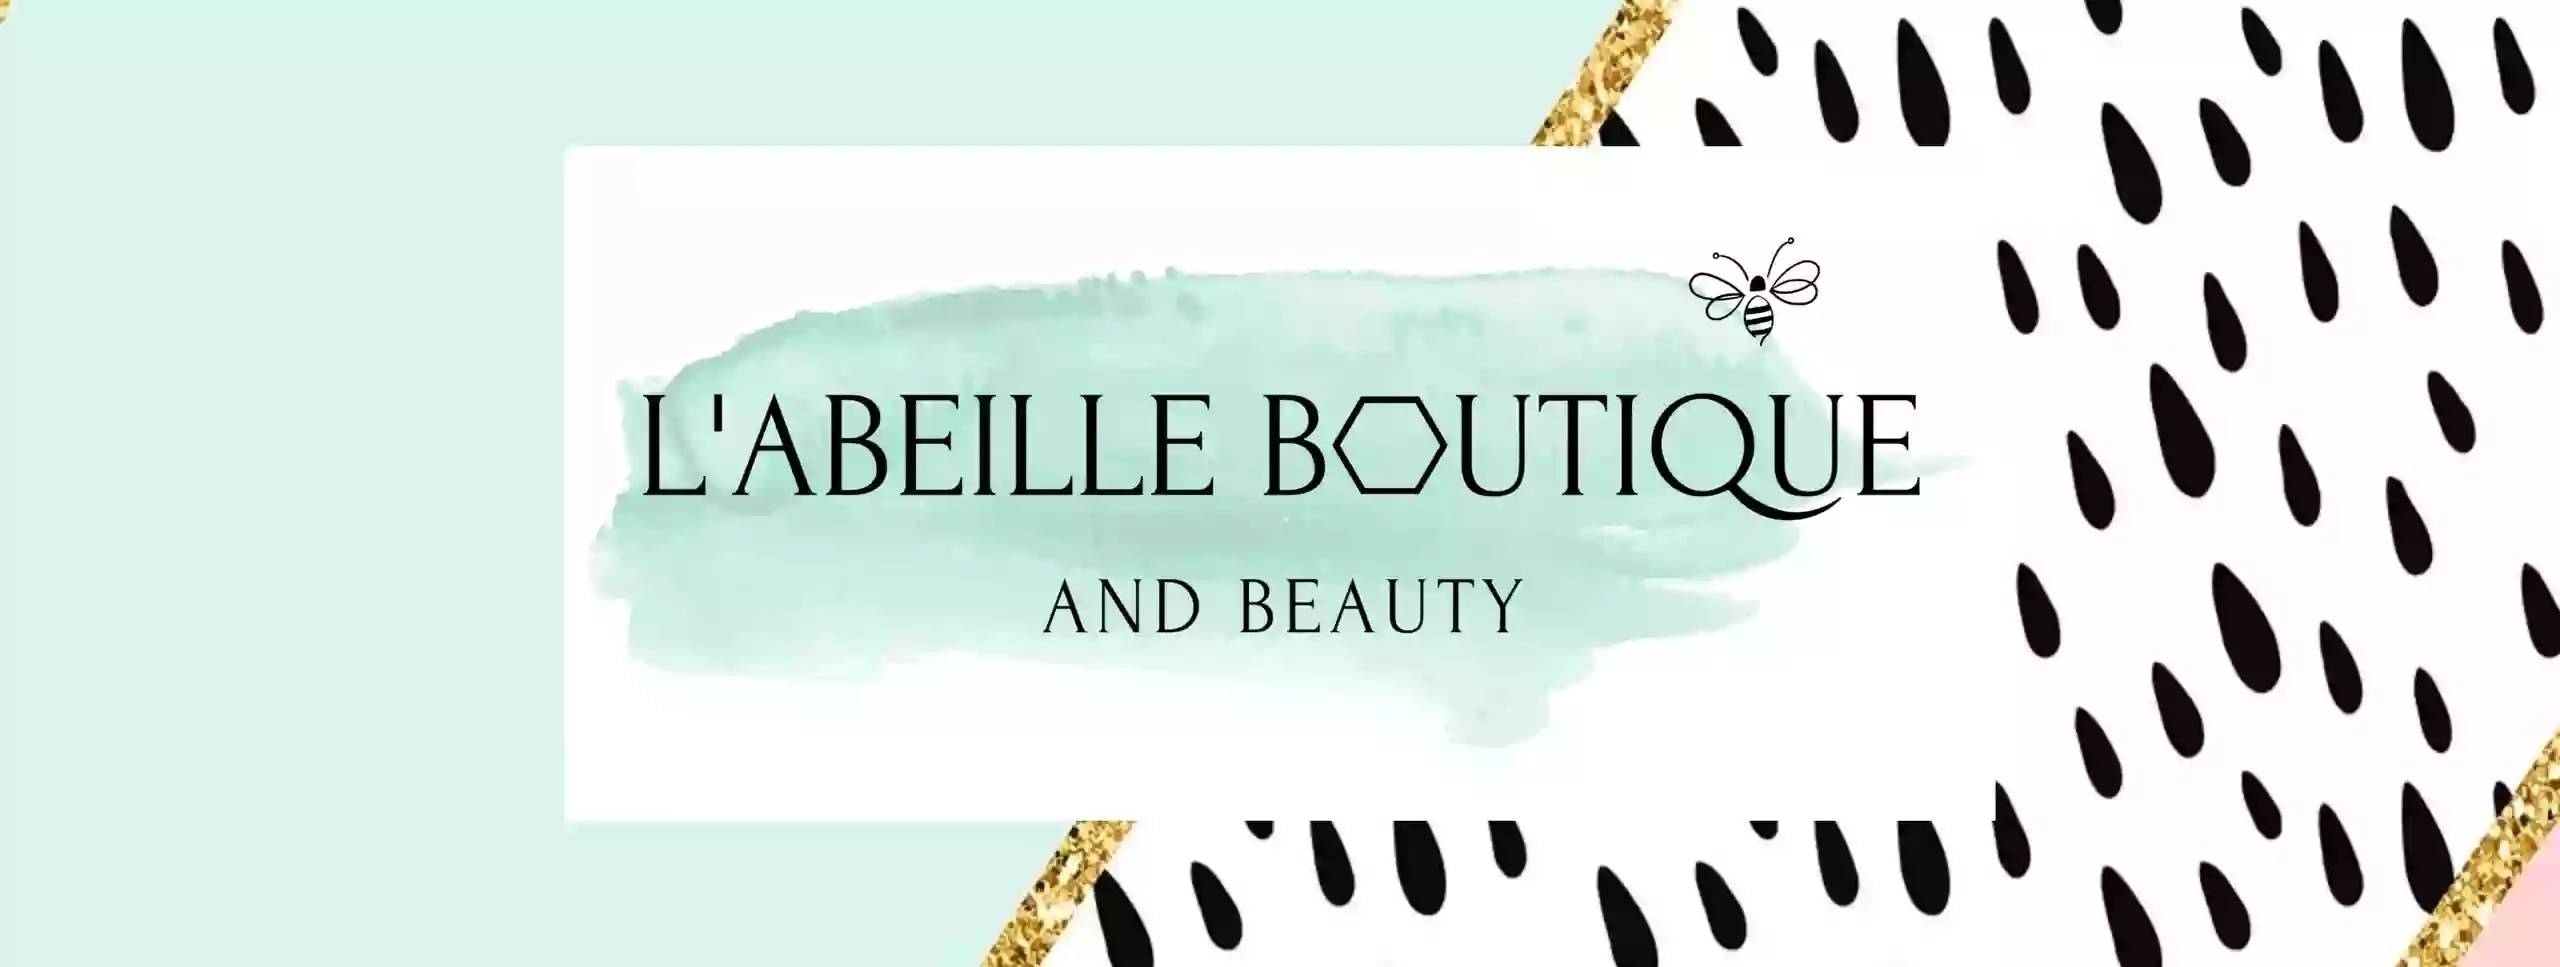 Labeille Boutique And Beauty